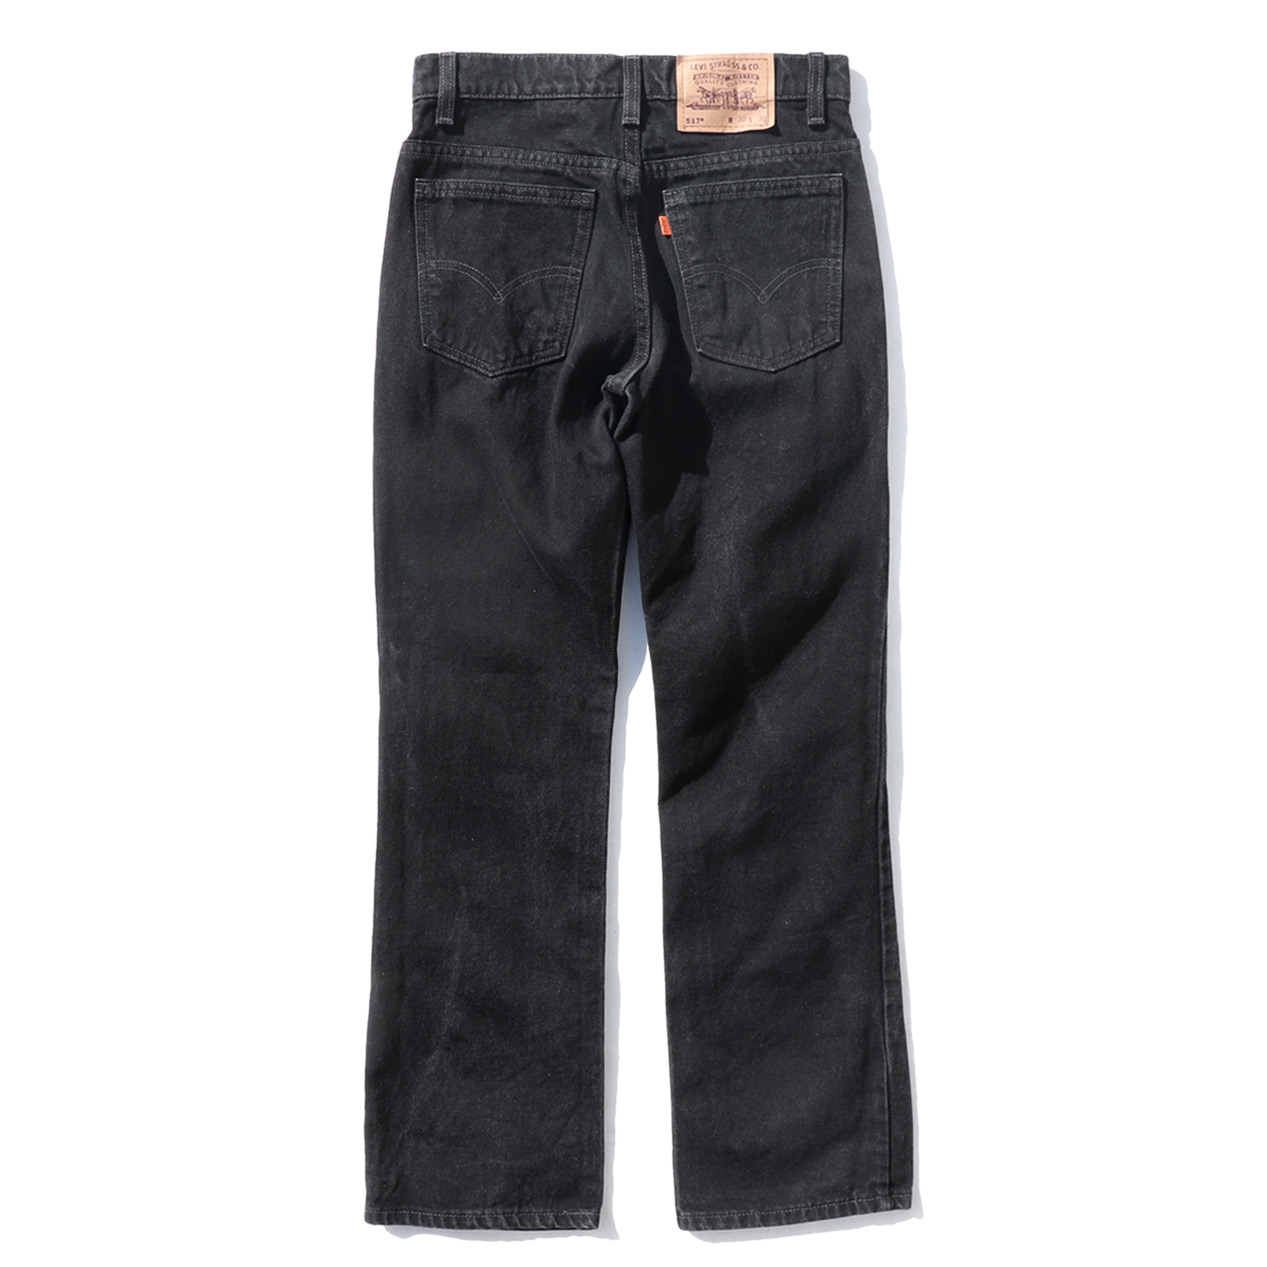 POST JUNK / 90's LEVI'S 517 Black Denim Pants Made In U.S.A. [W30